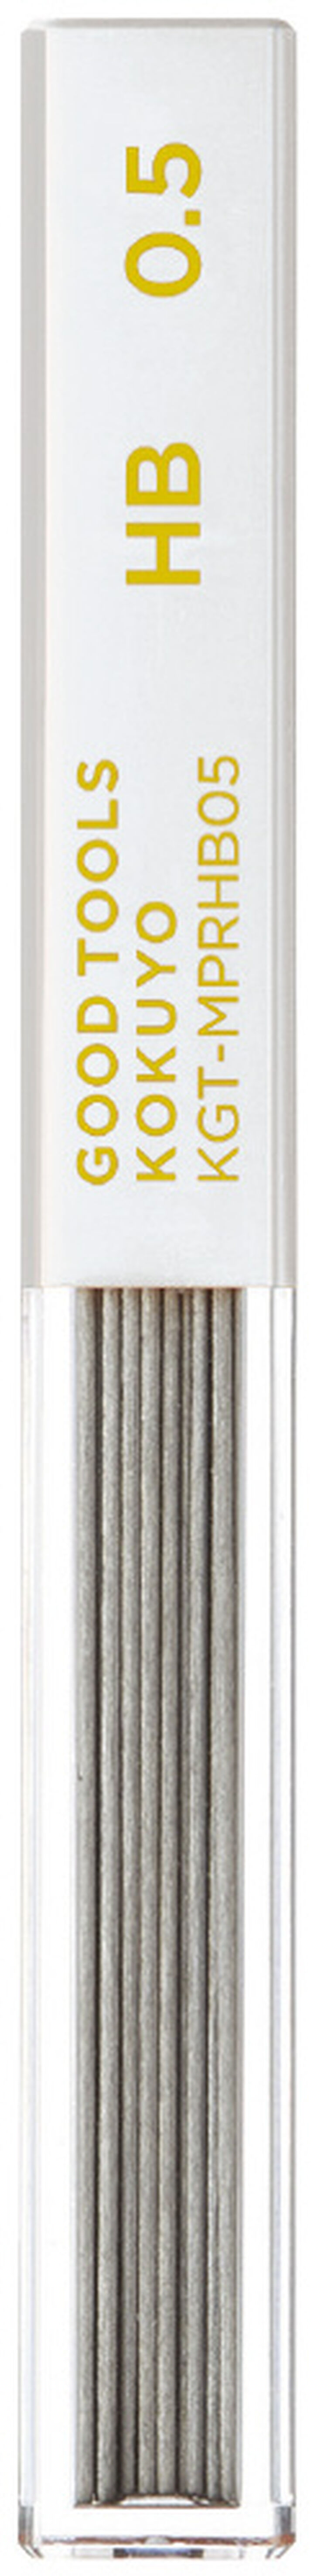 GOOD TOOLS Mechanical Pencil 0.5mm,White, medium